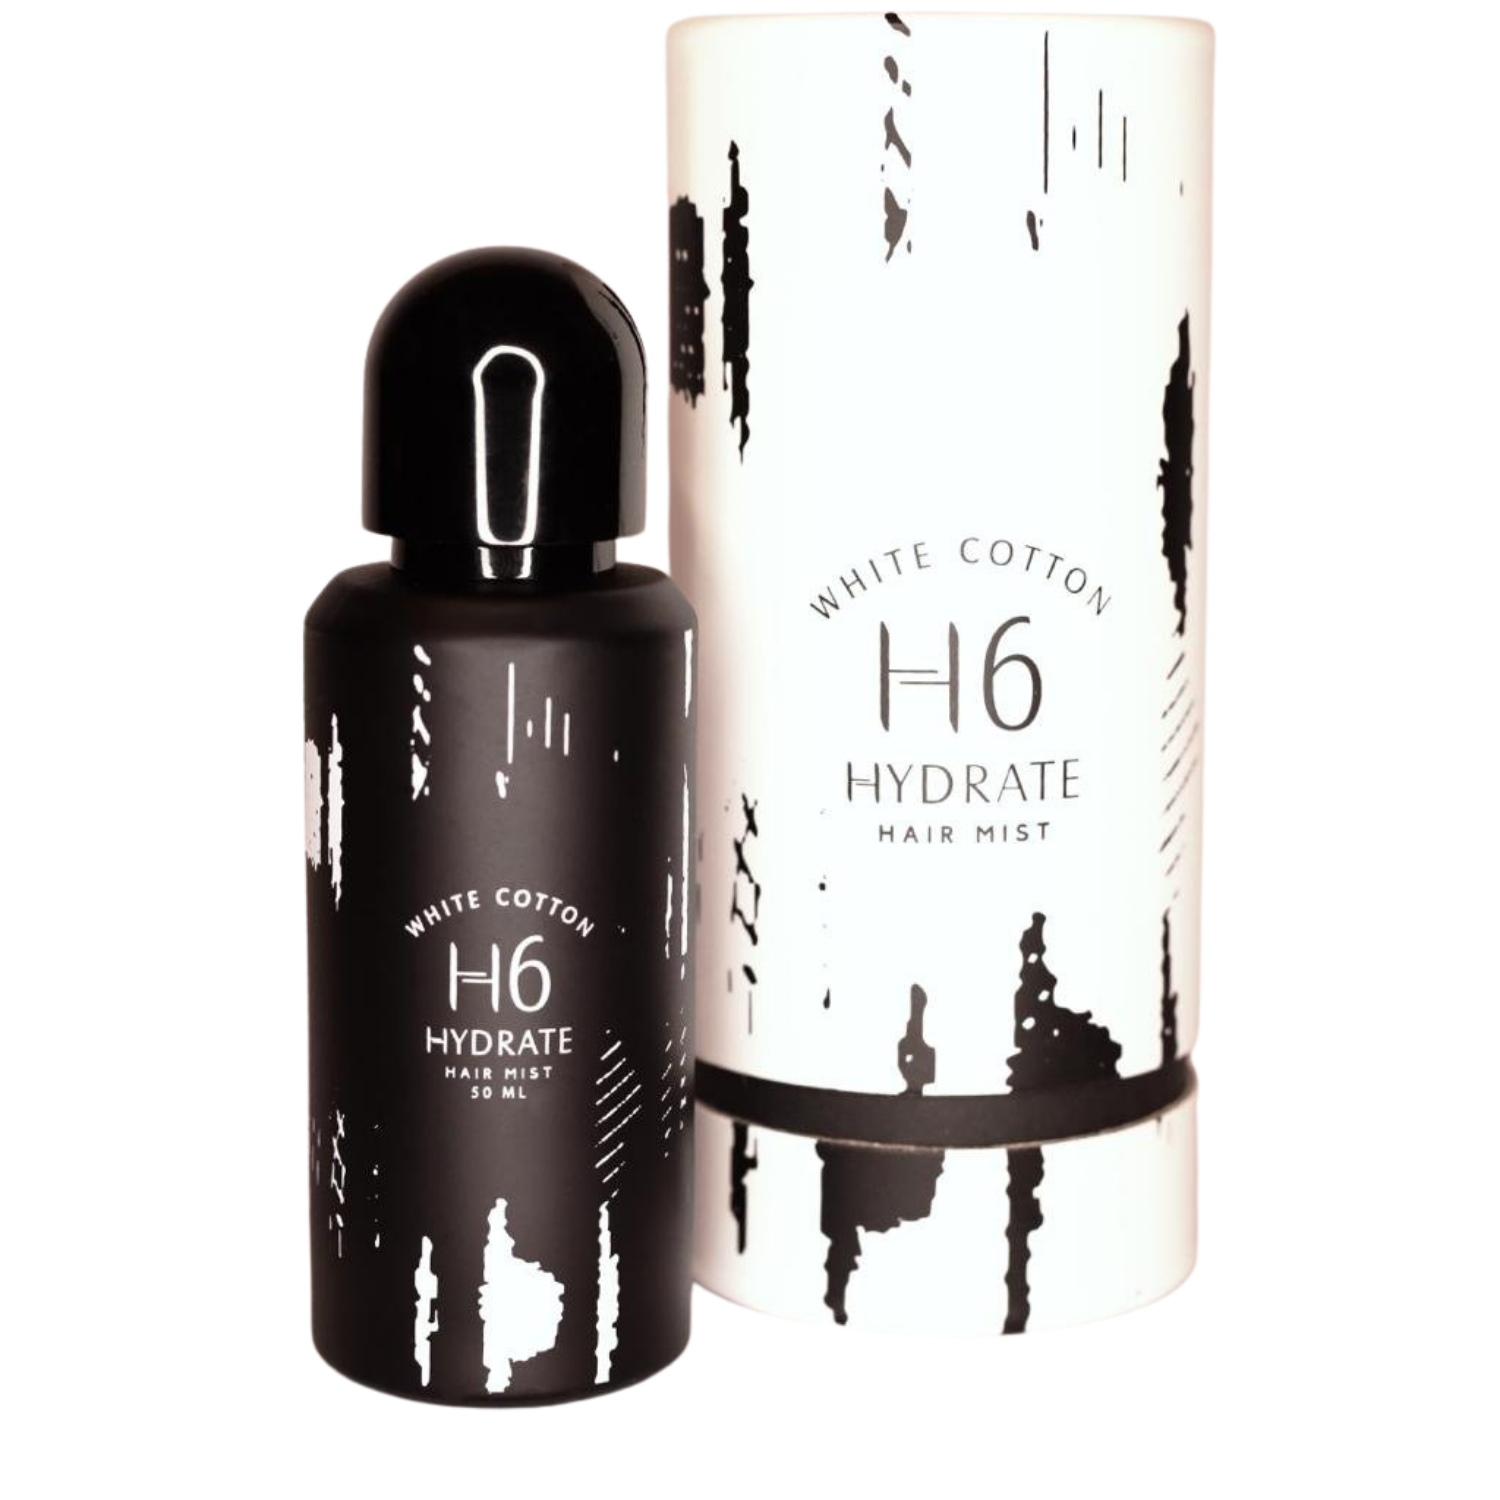 hydrate-white-cotton-hair-mist-h6